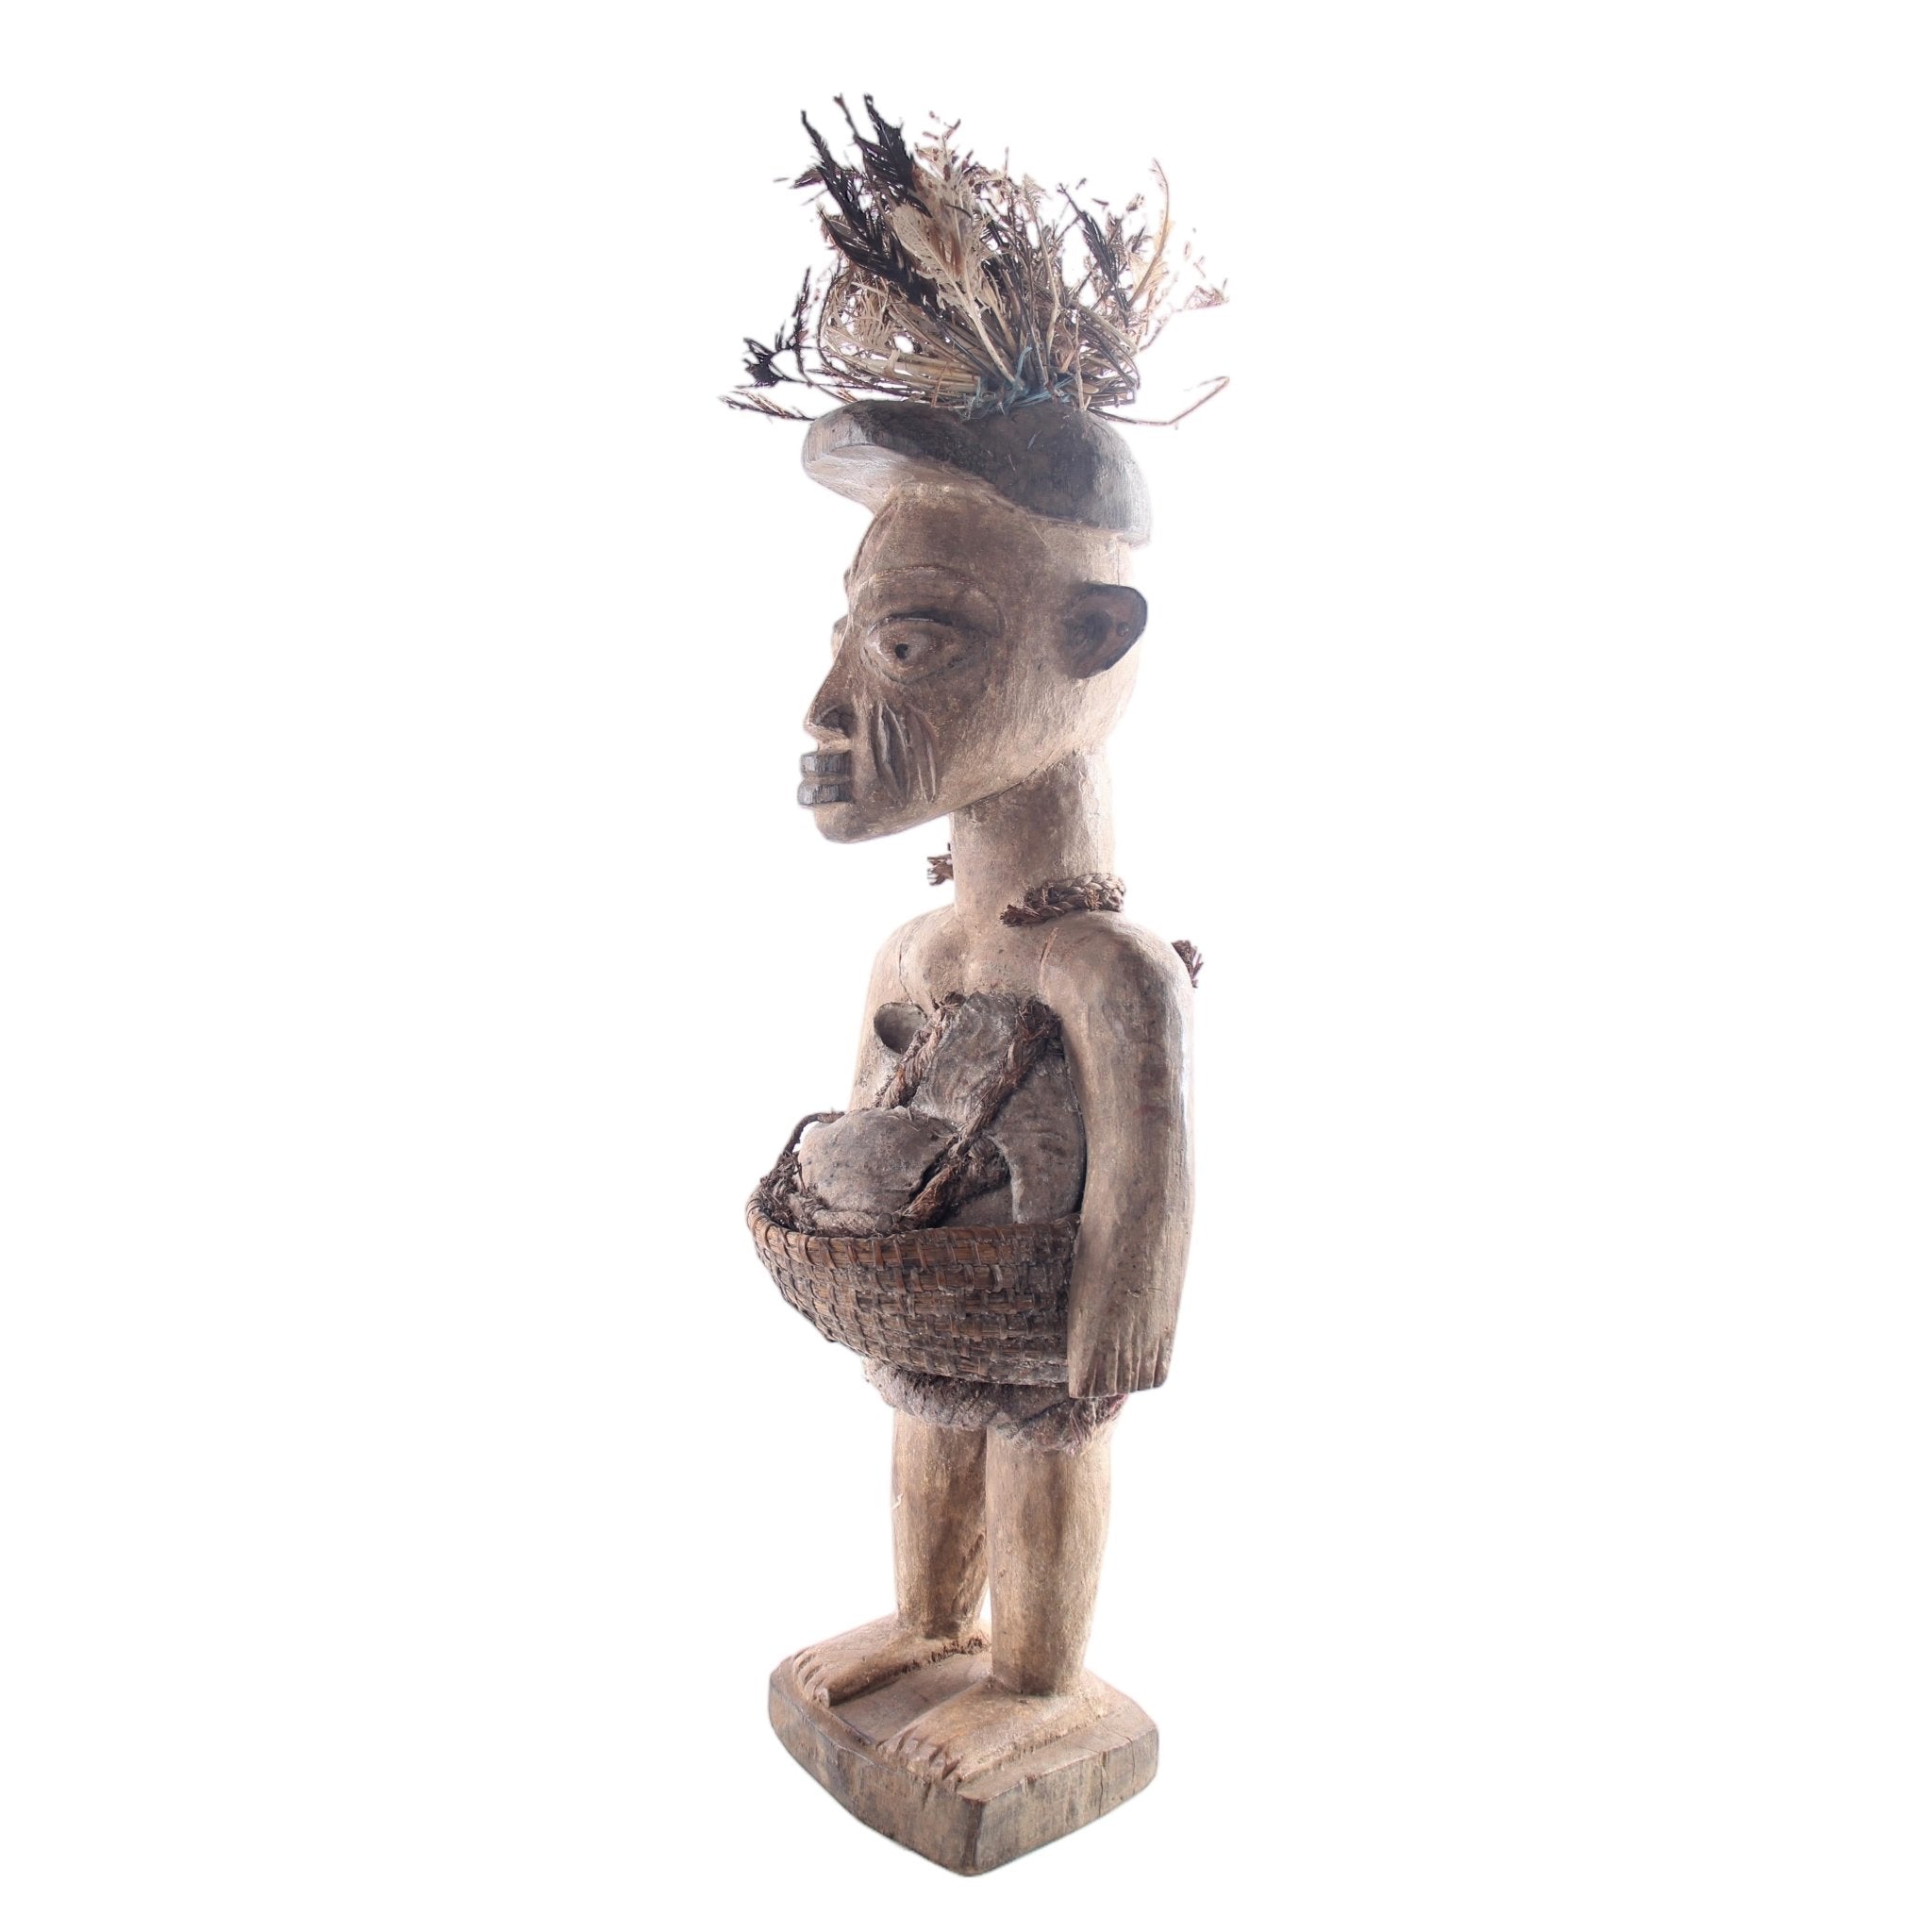 Basonge/Songye Tribe Figurine ~28.7" Tall - African Angel Art - Figurine